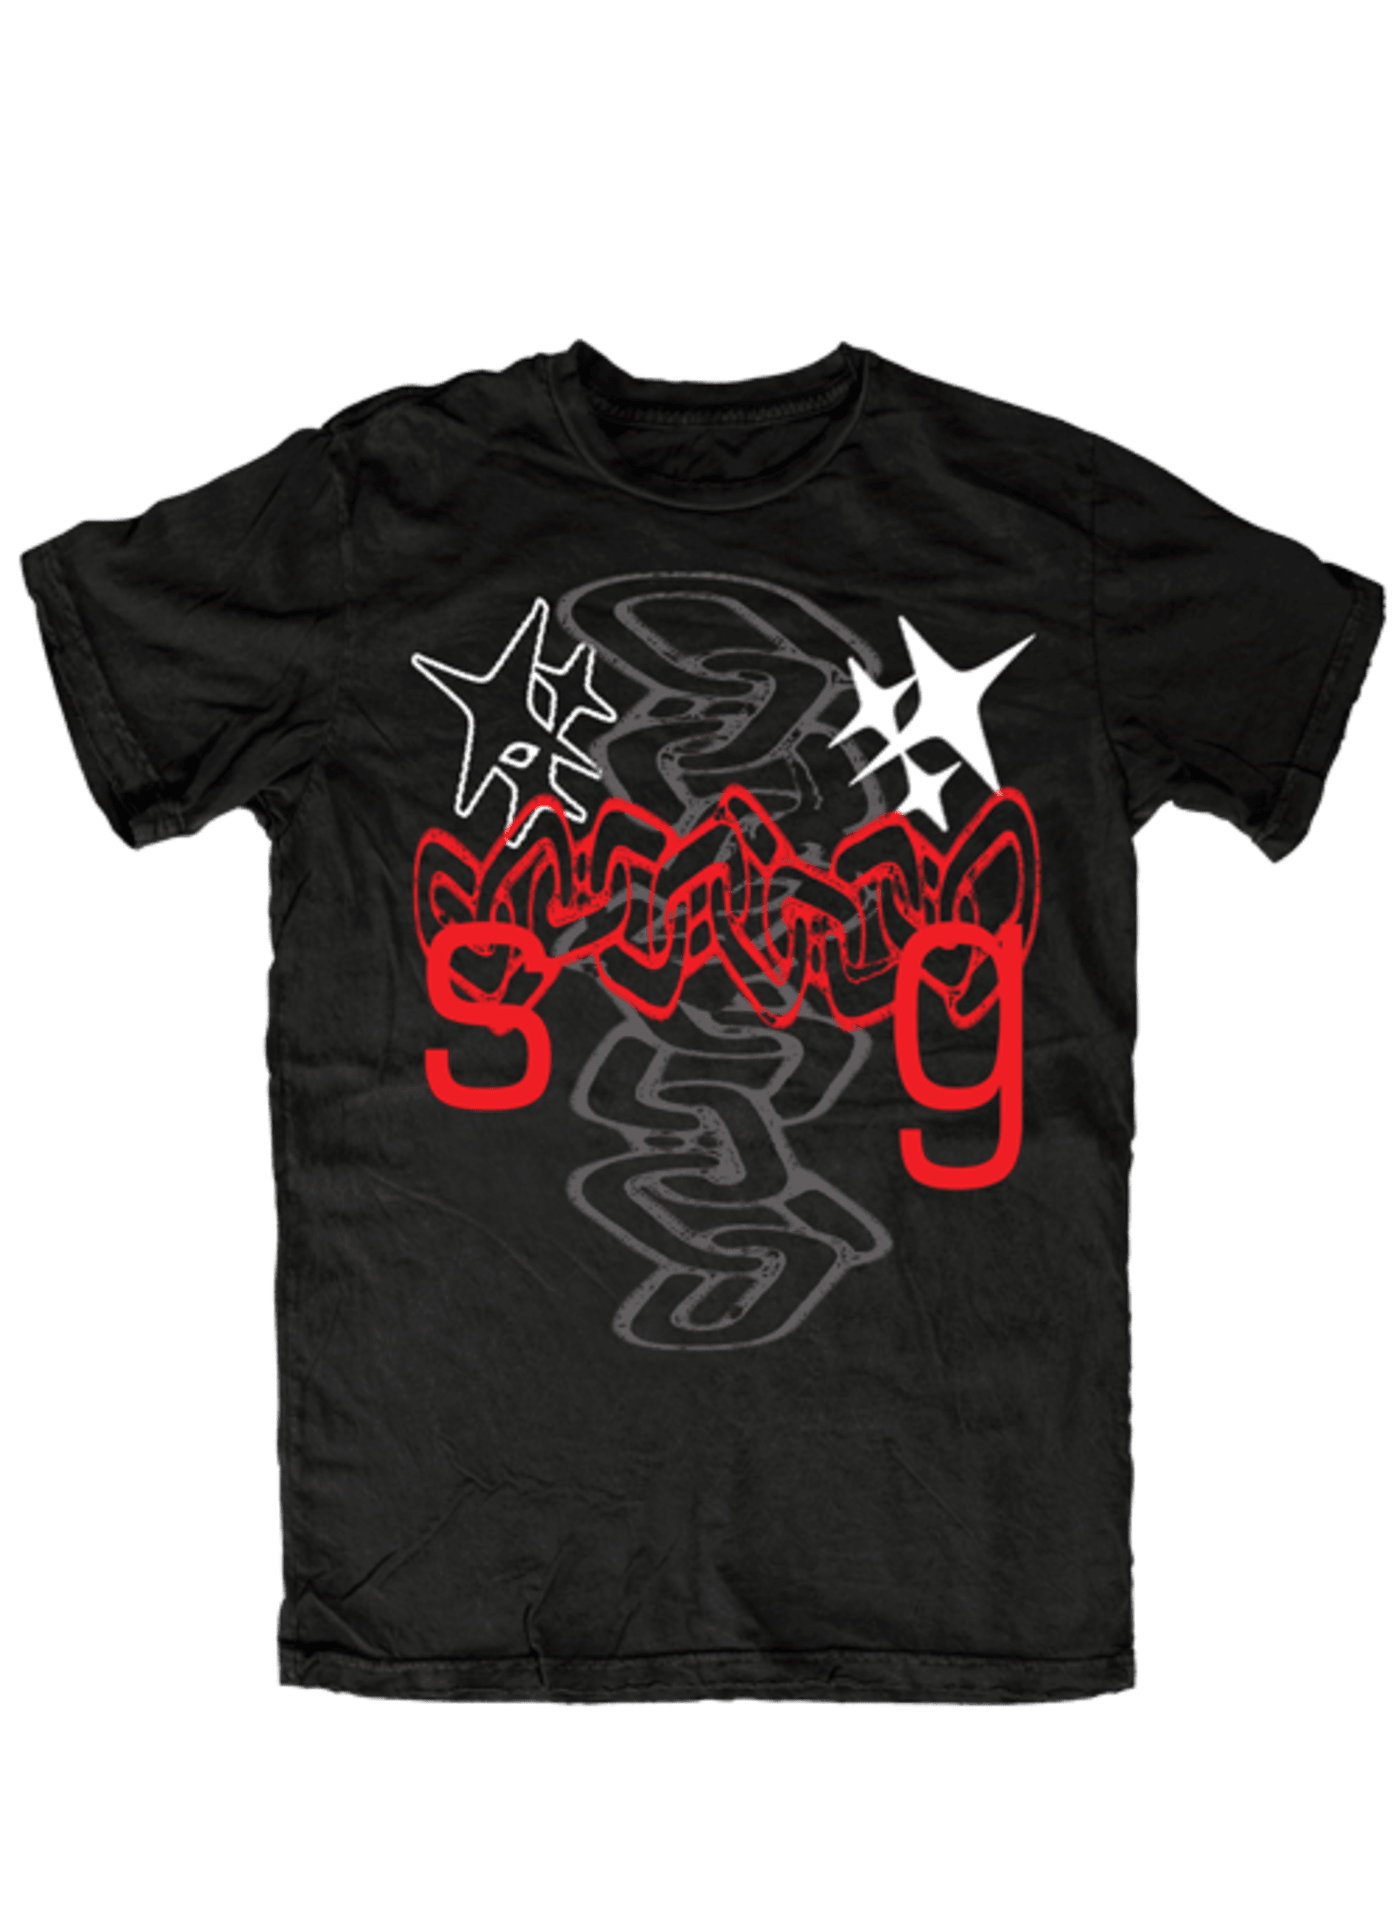 Shield Gang Unknown Memory Tour T-Shirt (Chains T-Shirt)